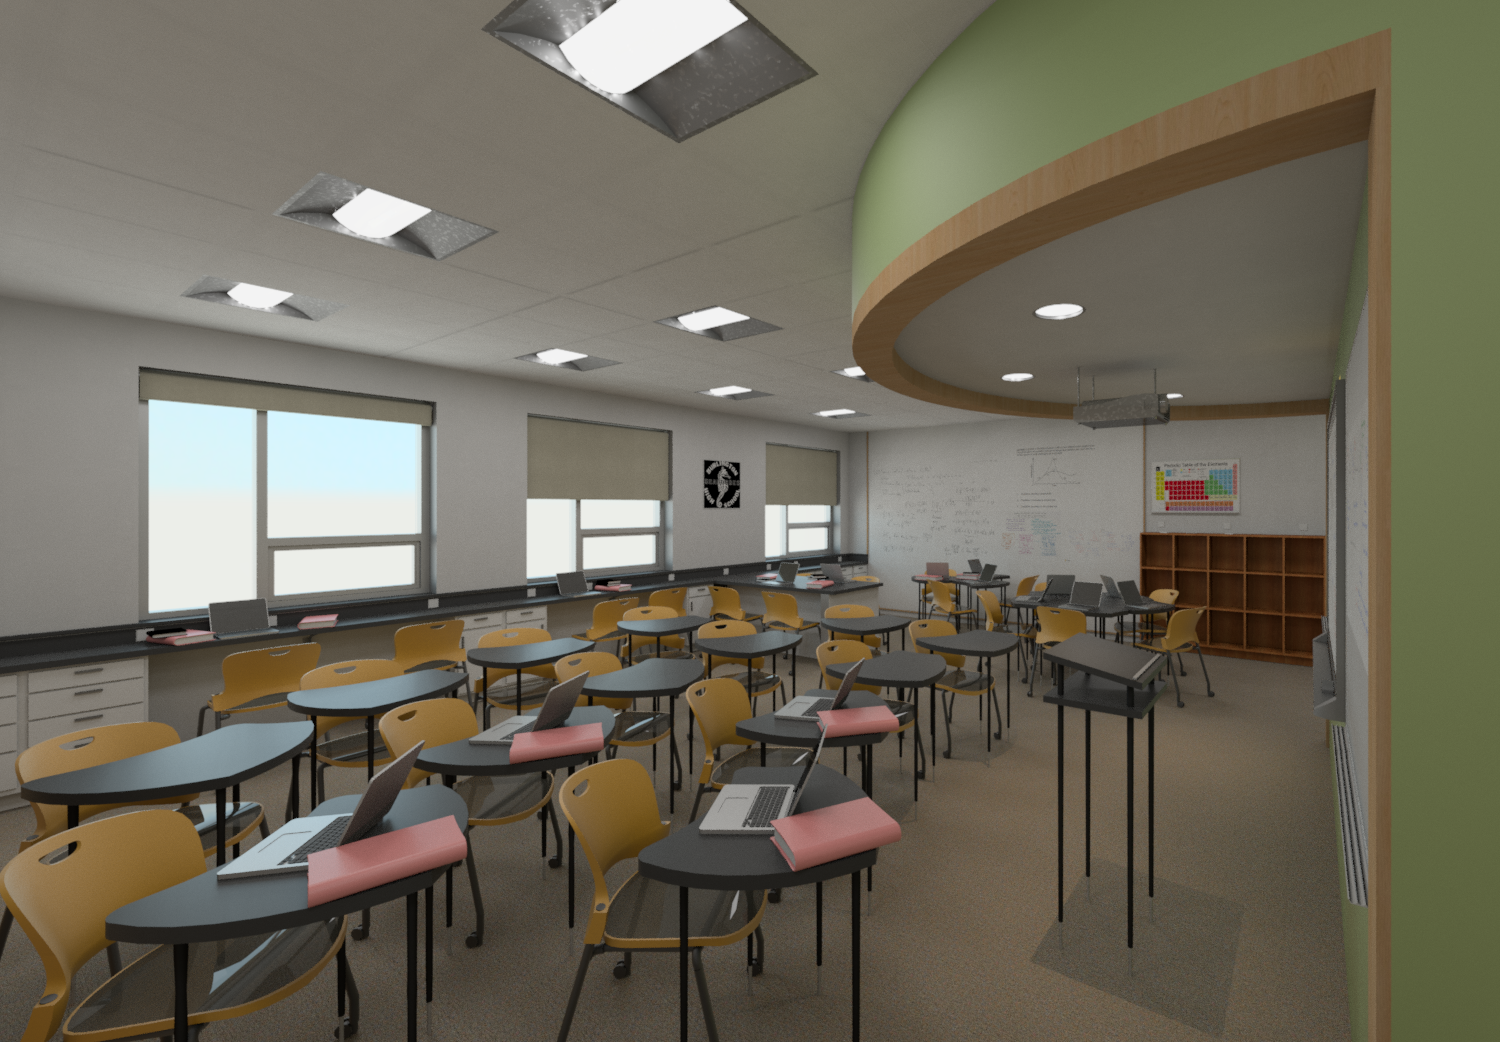 Classroom Concept Image